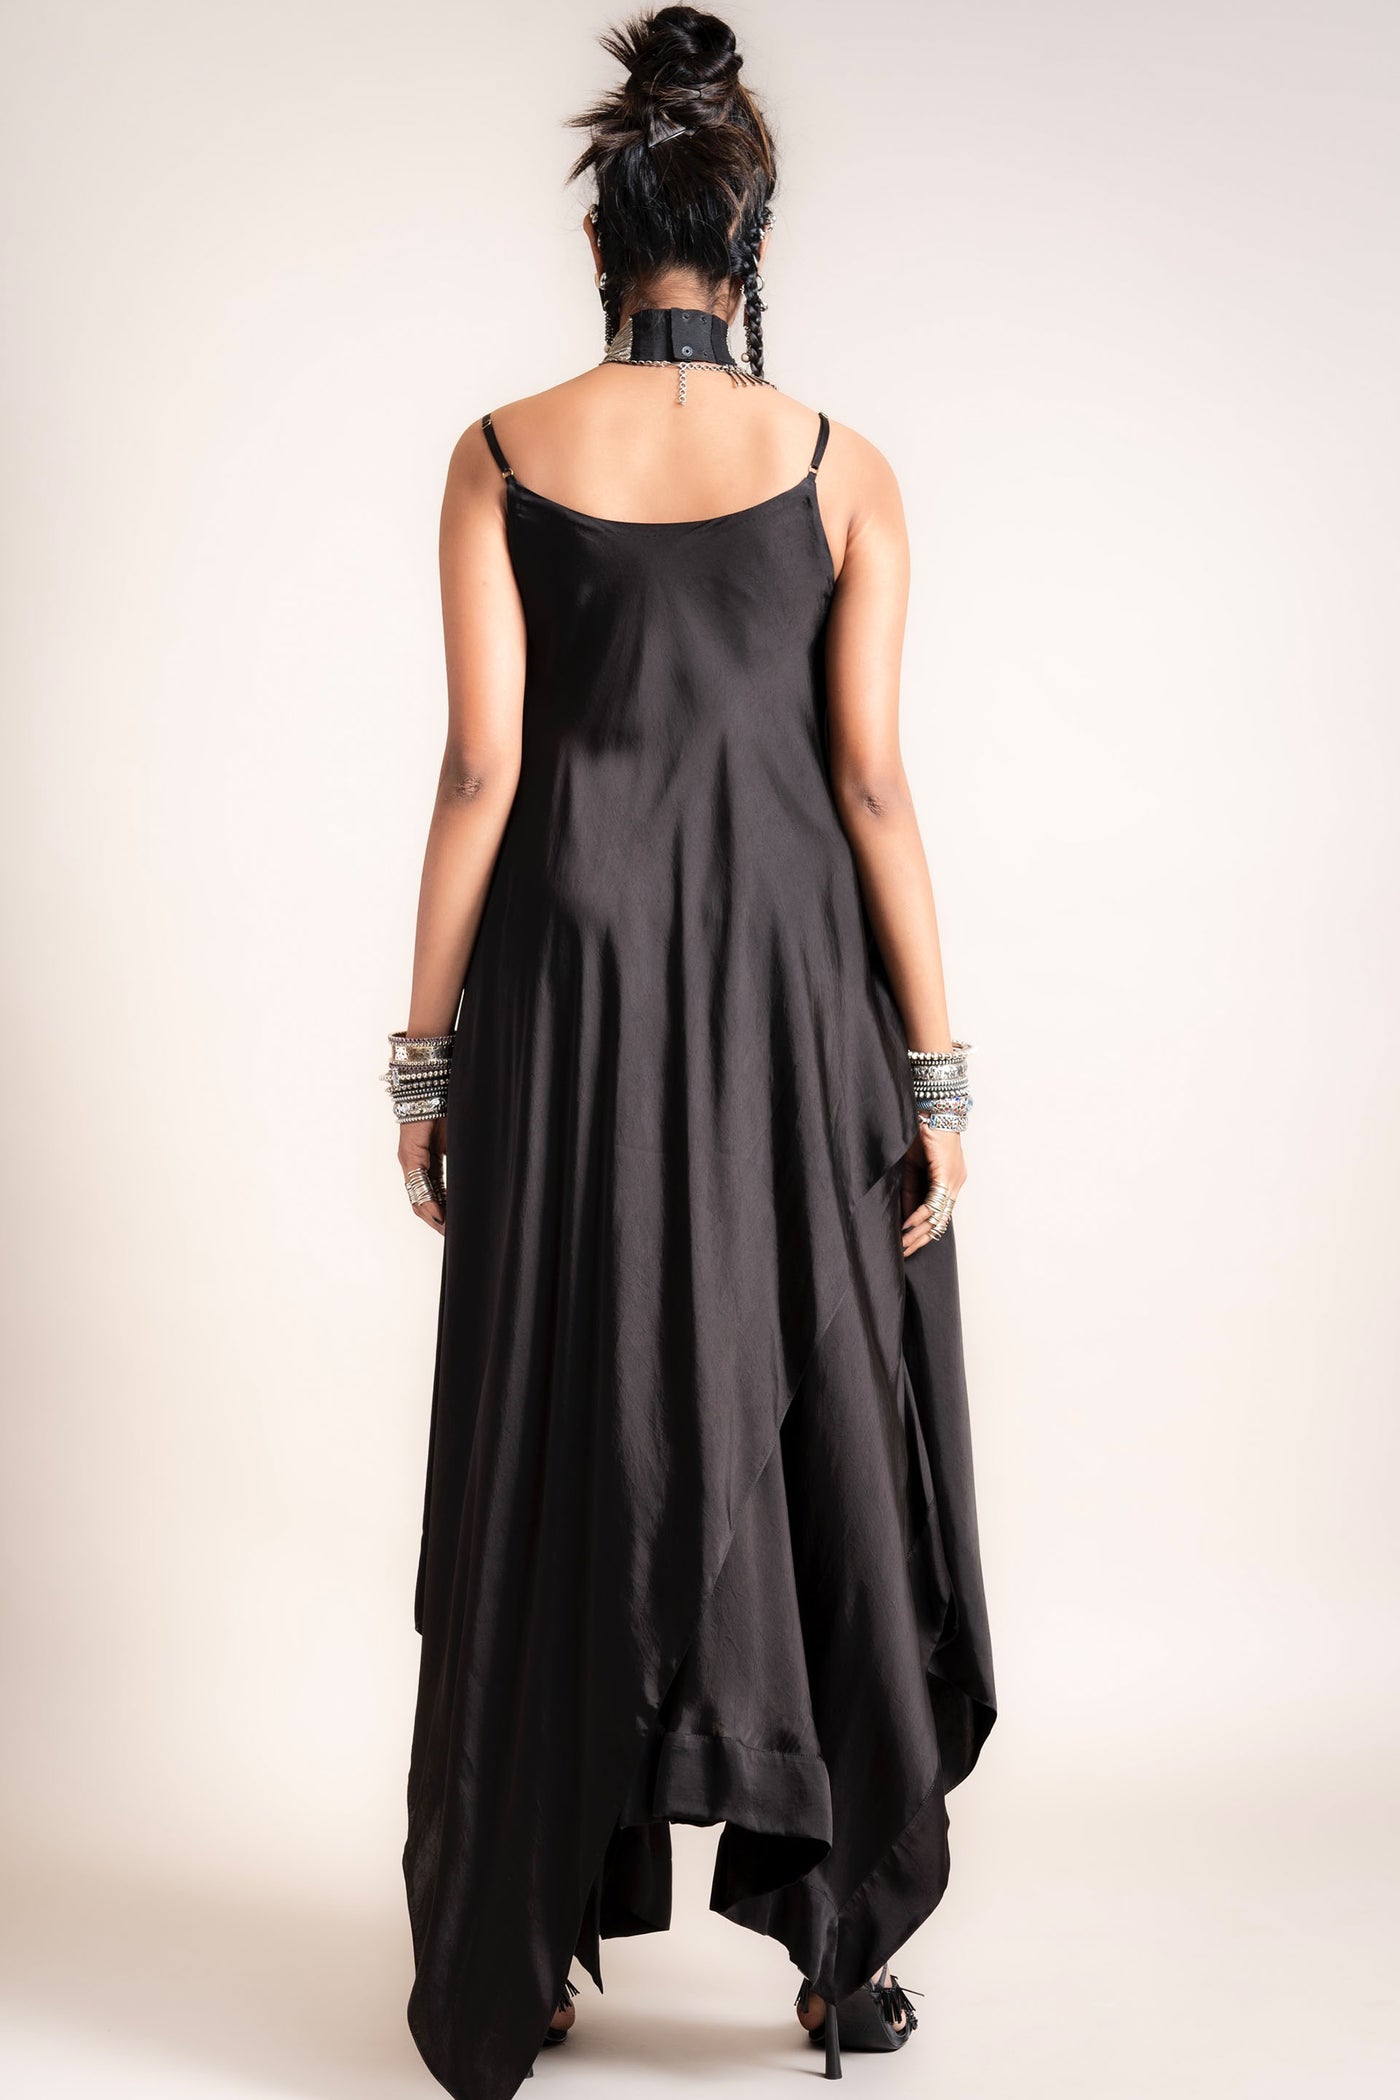 Nupur Kanoi Singlet Top With Skirt Set black designer fashion online shopping melange singapore